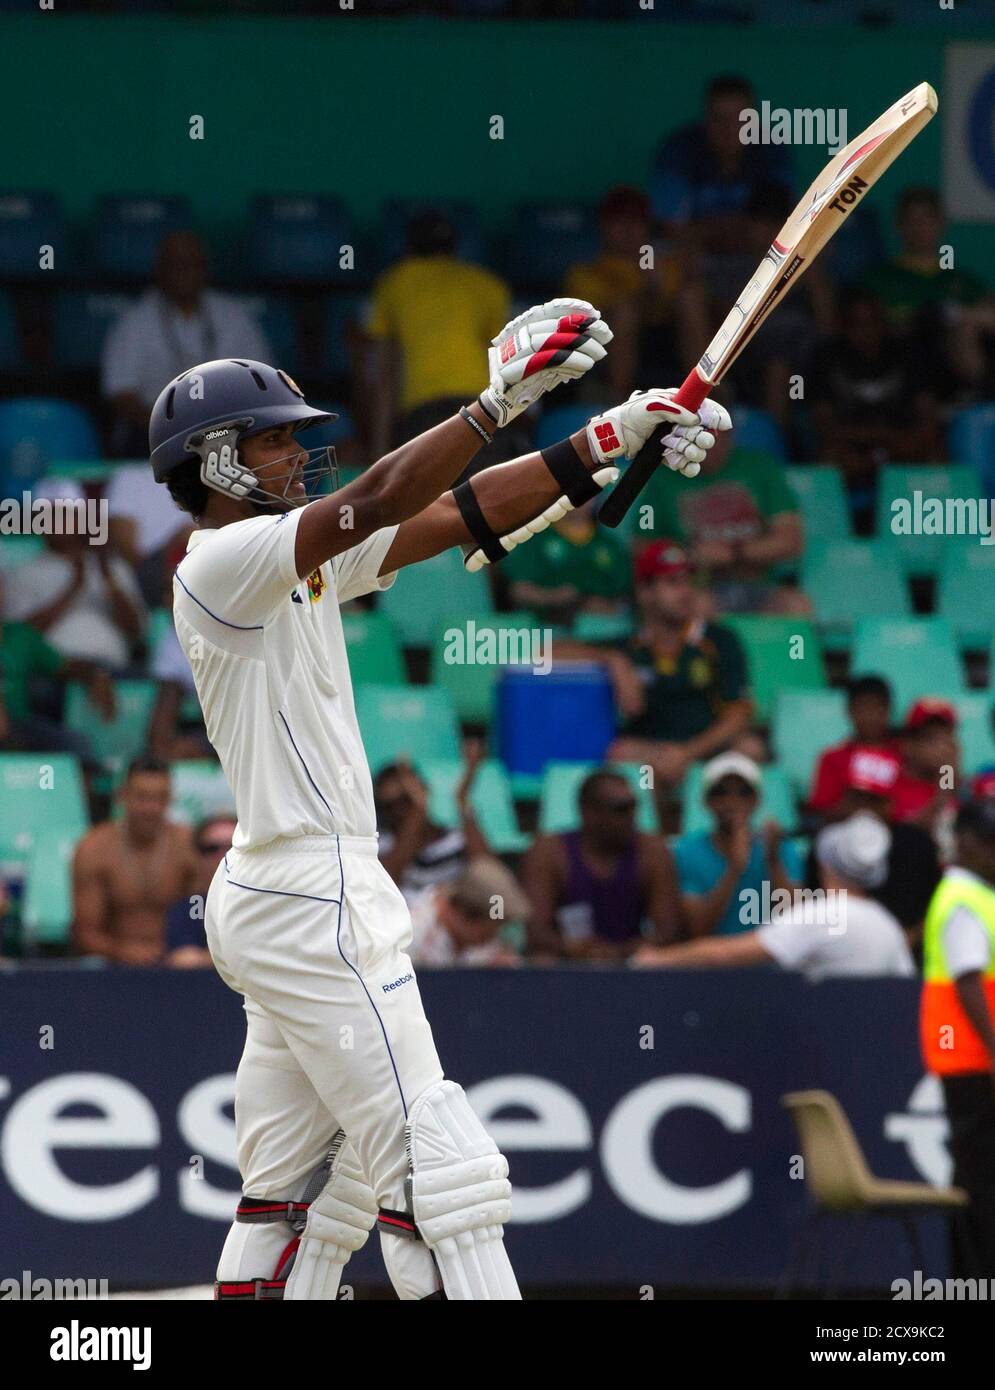 Sri Lanka's Dinesh Chandimal celebrates scoring a half century during their test cricket match against South Africa in Durban December 26, 2011. REUTERS/Rogan Ward (SOUTH AFRICA - Tags: SPORT CRICKET) Stock Photo